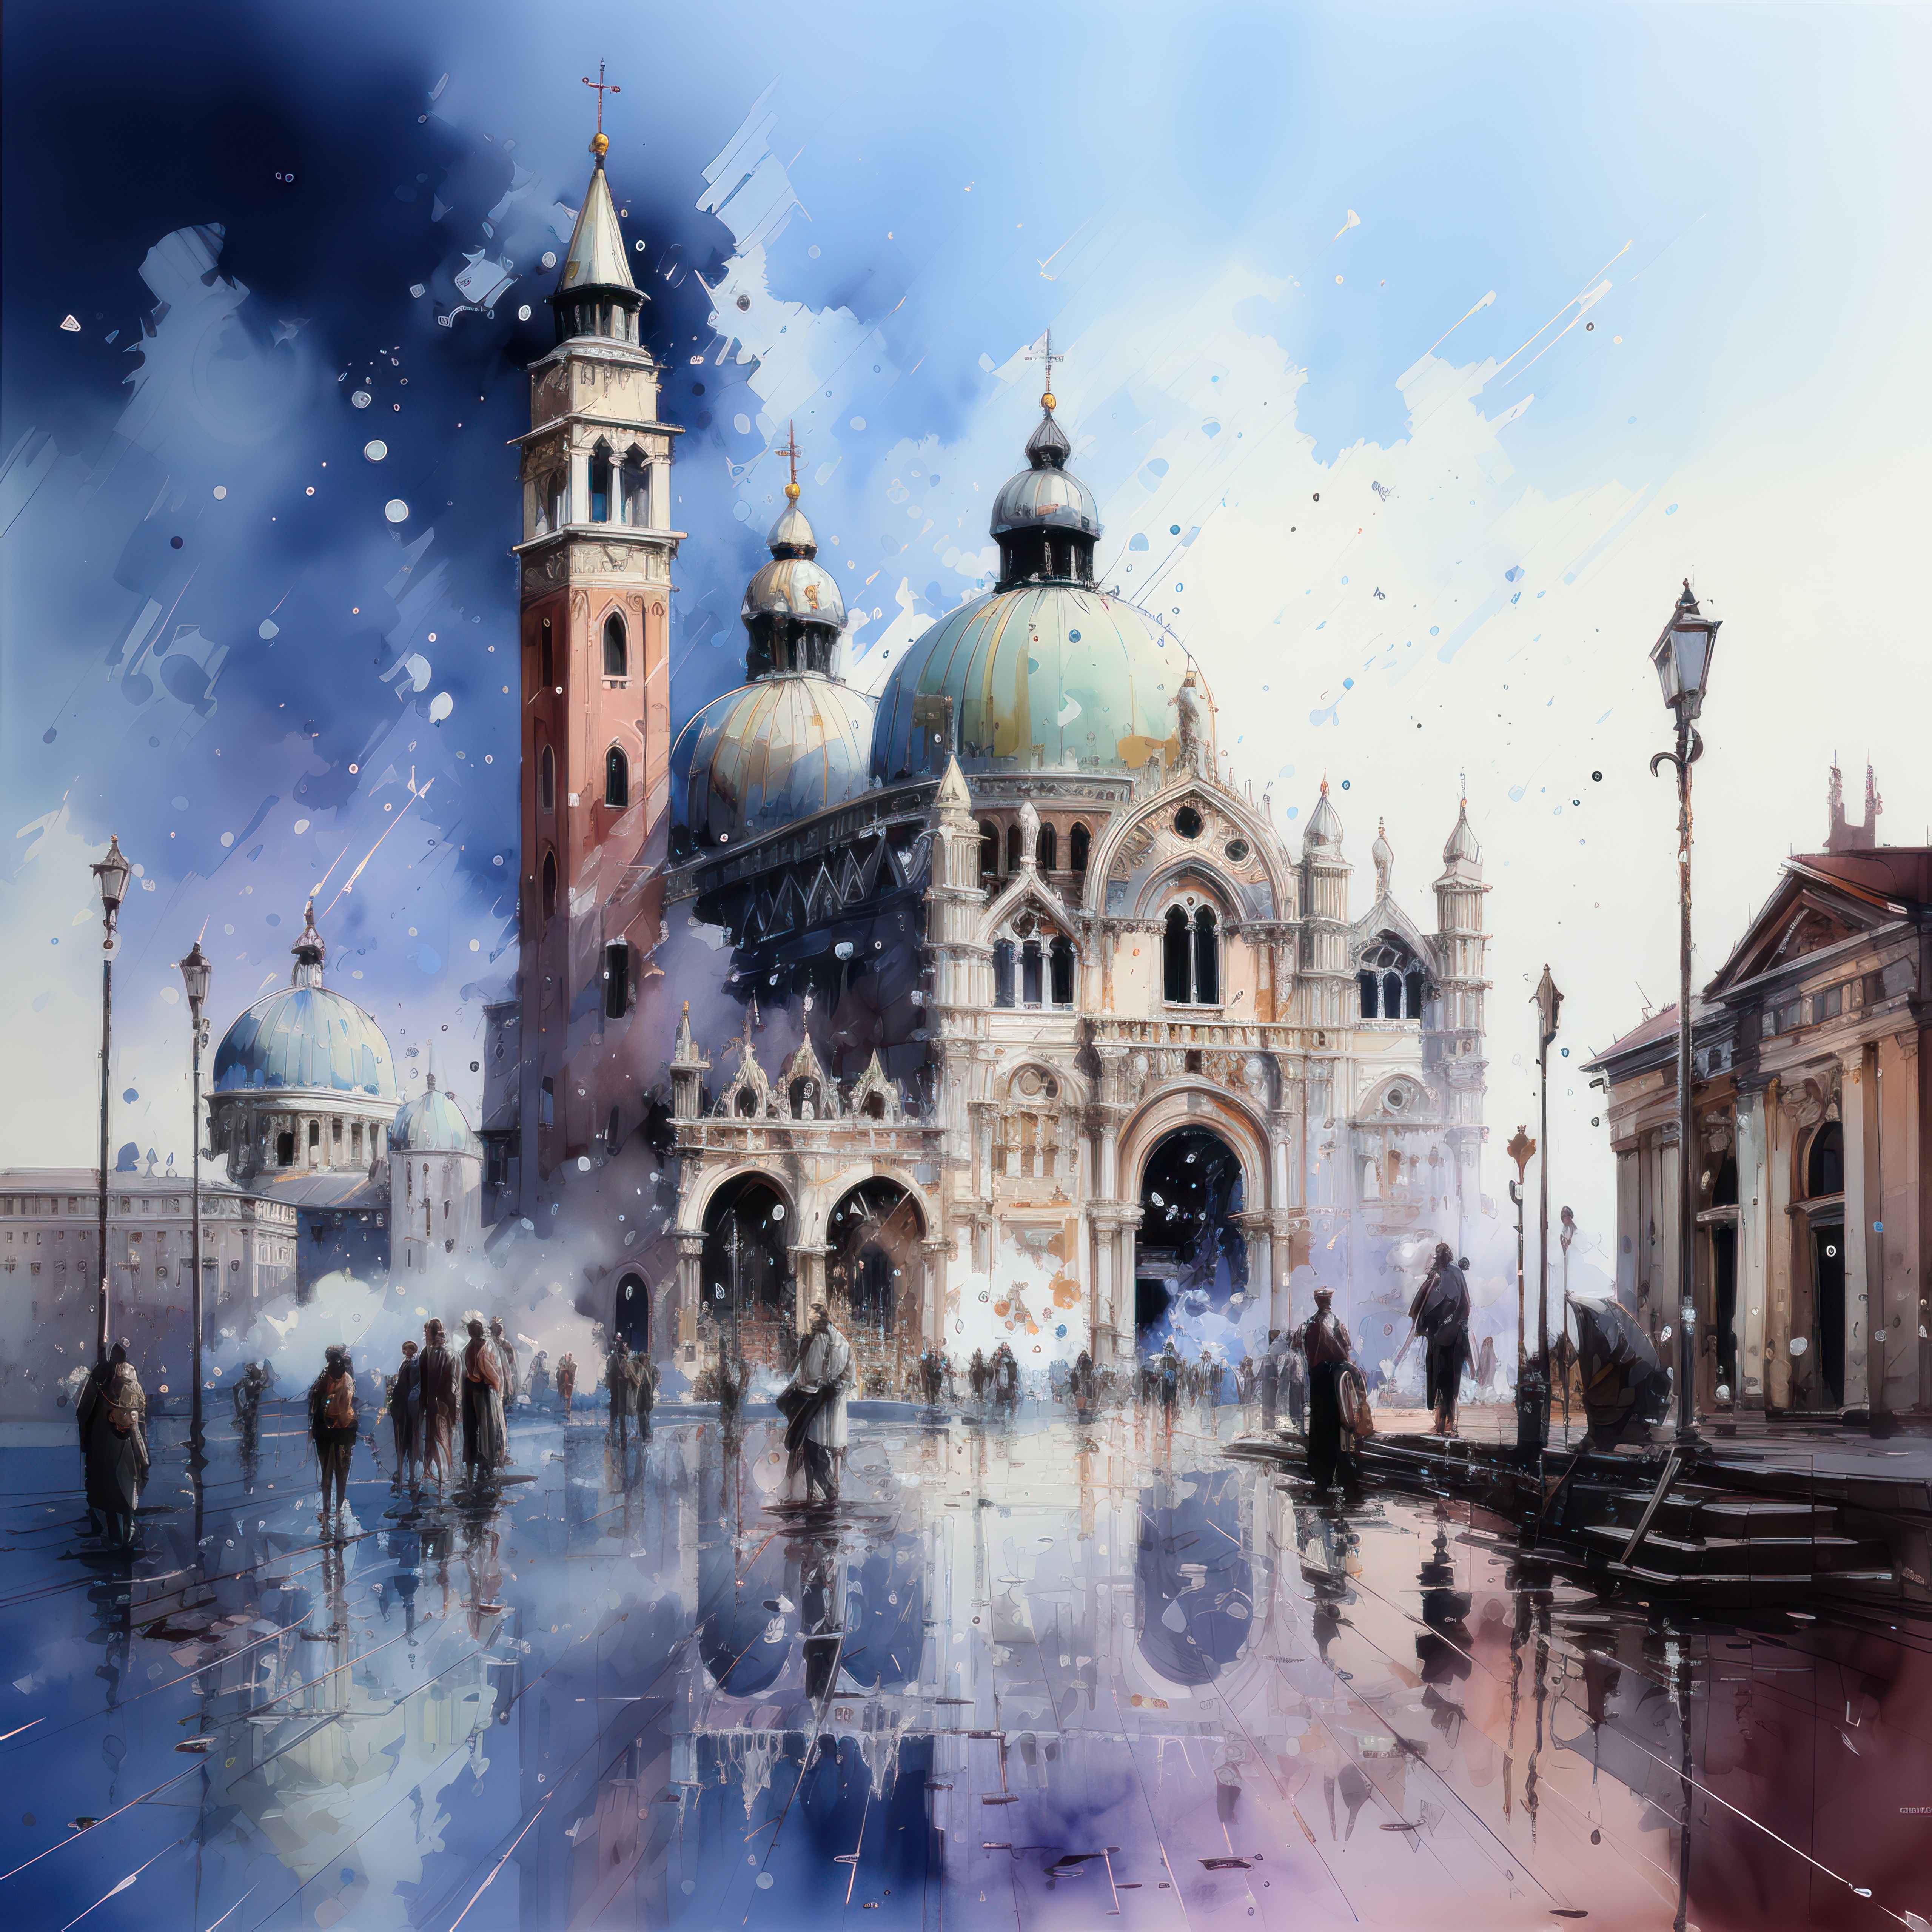 Venice view by Shivalesca